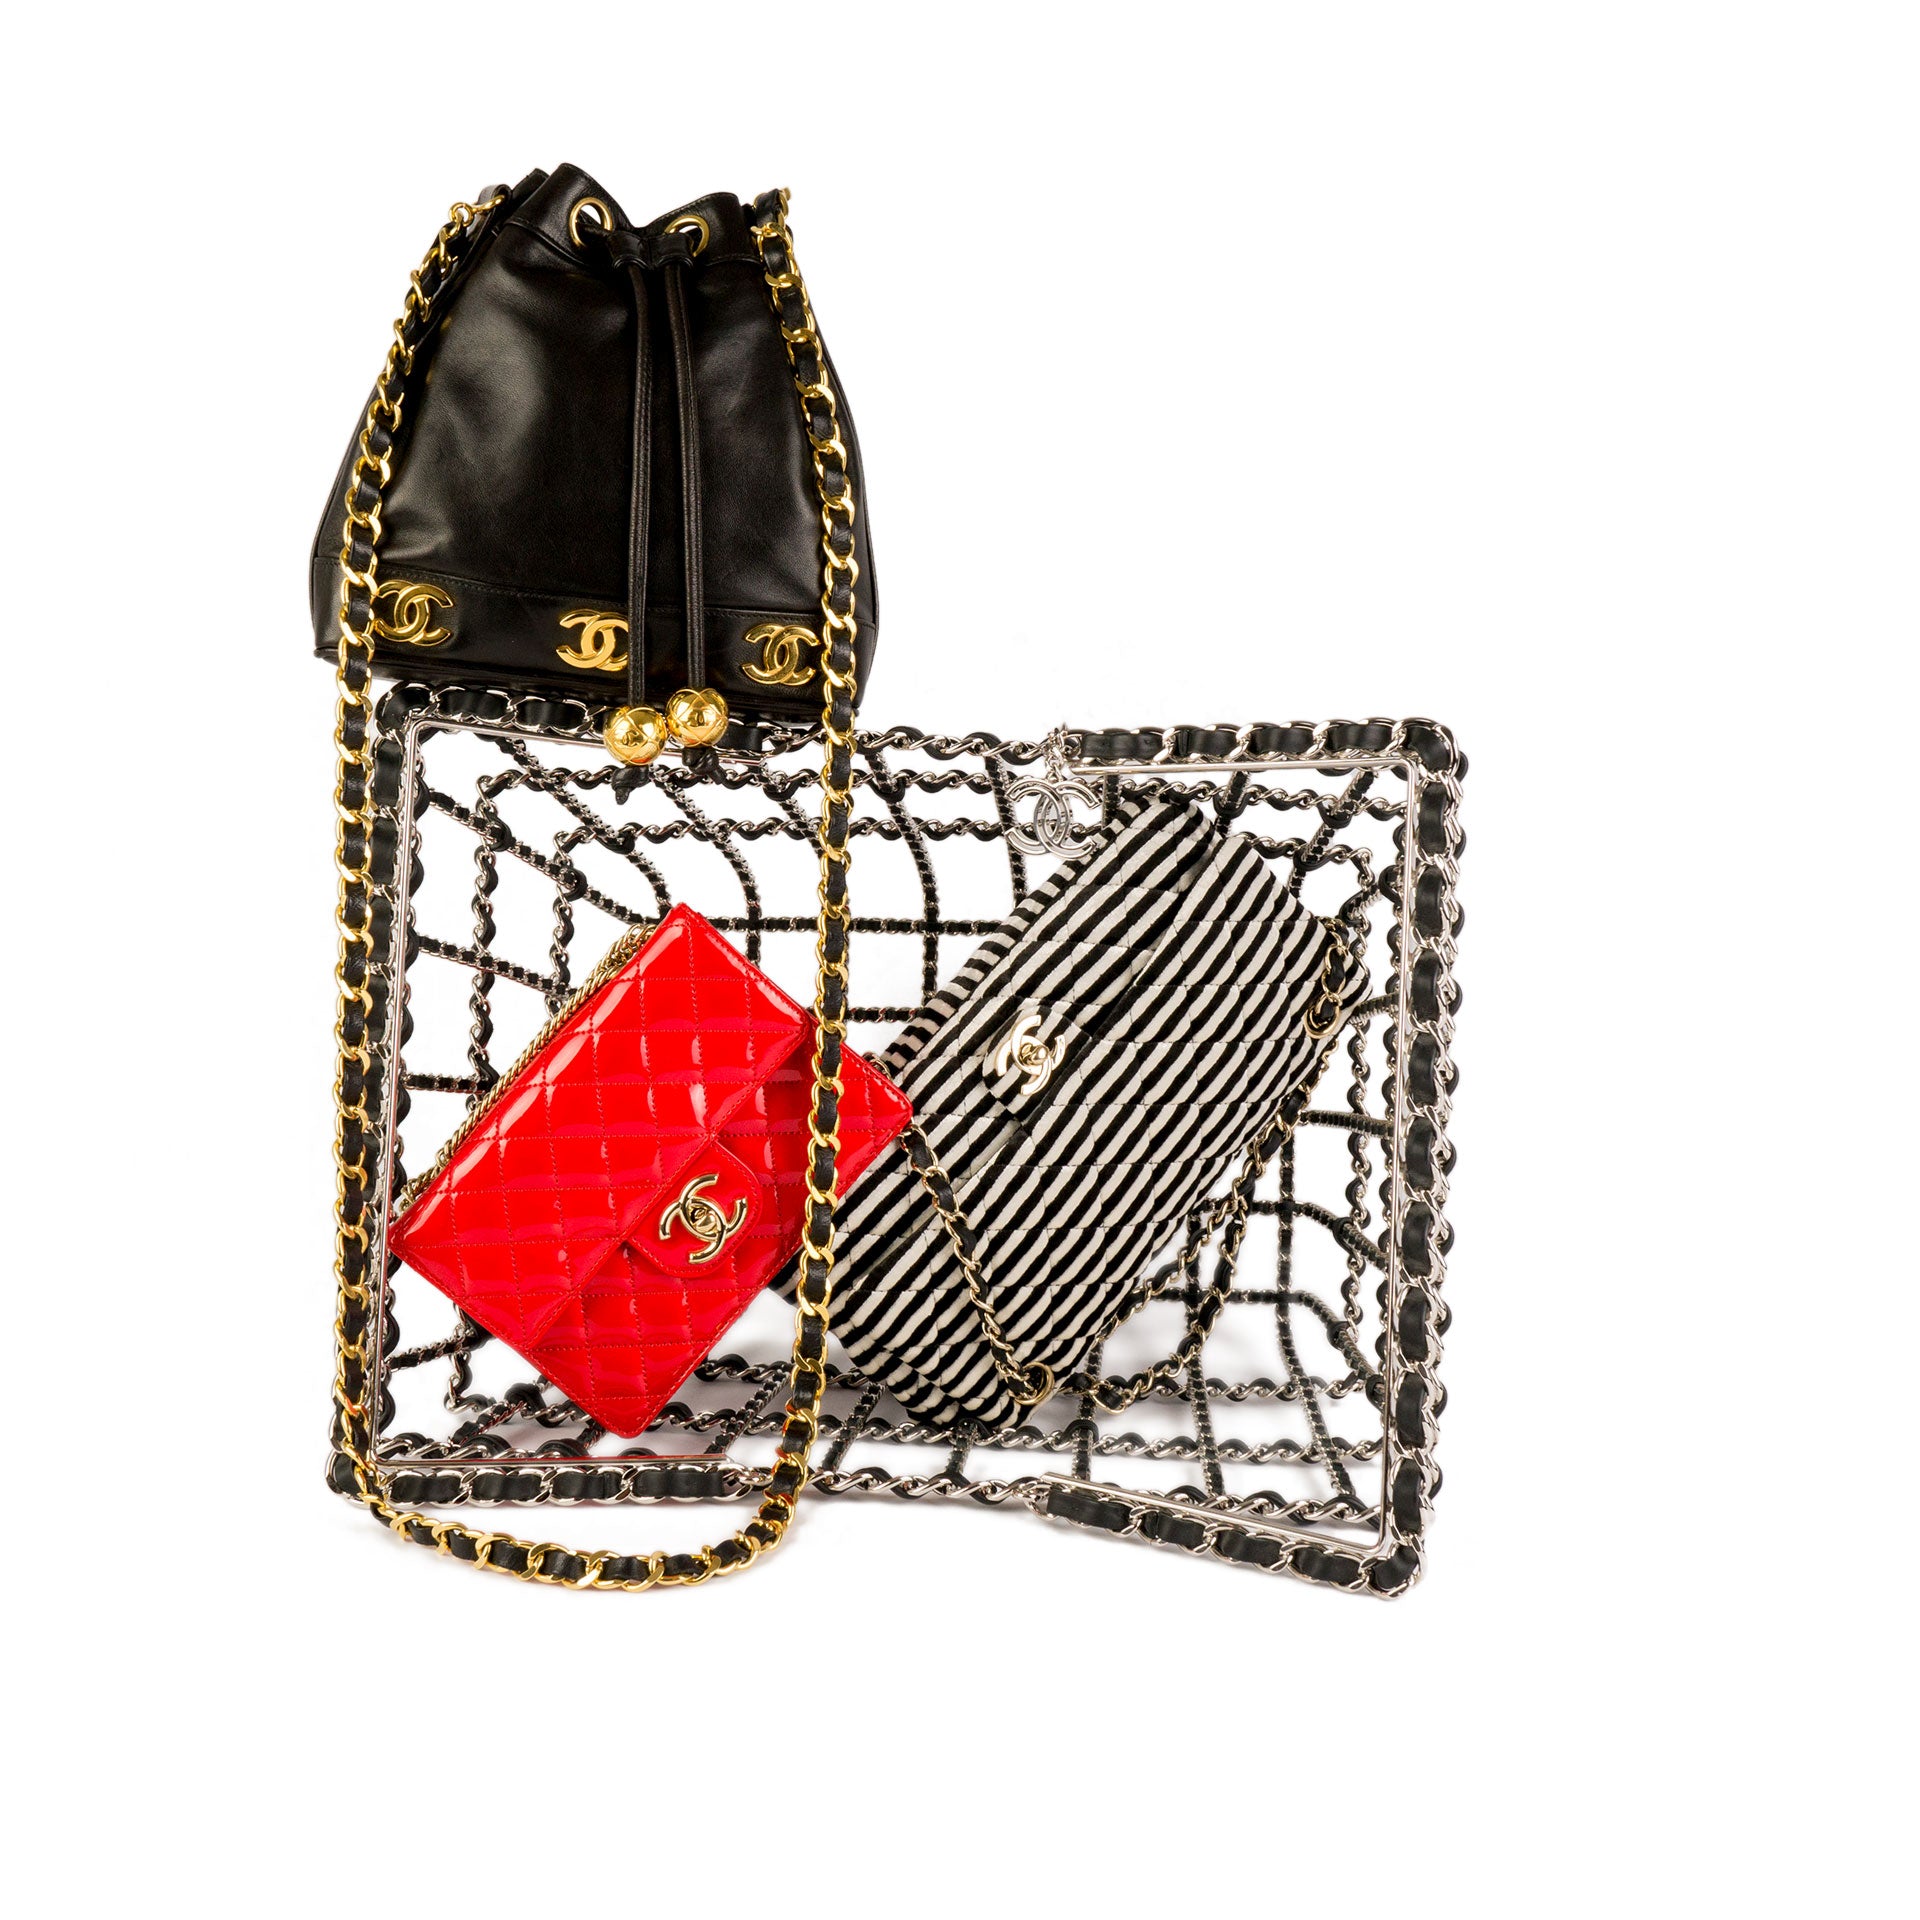 mini flap bag chanel red handbag